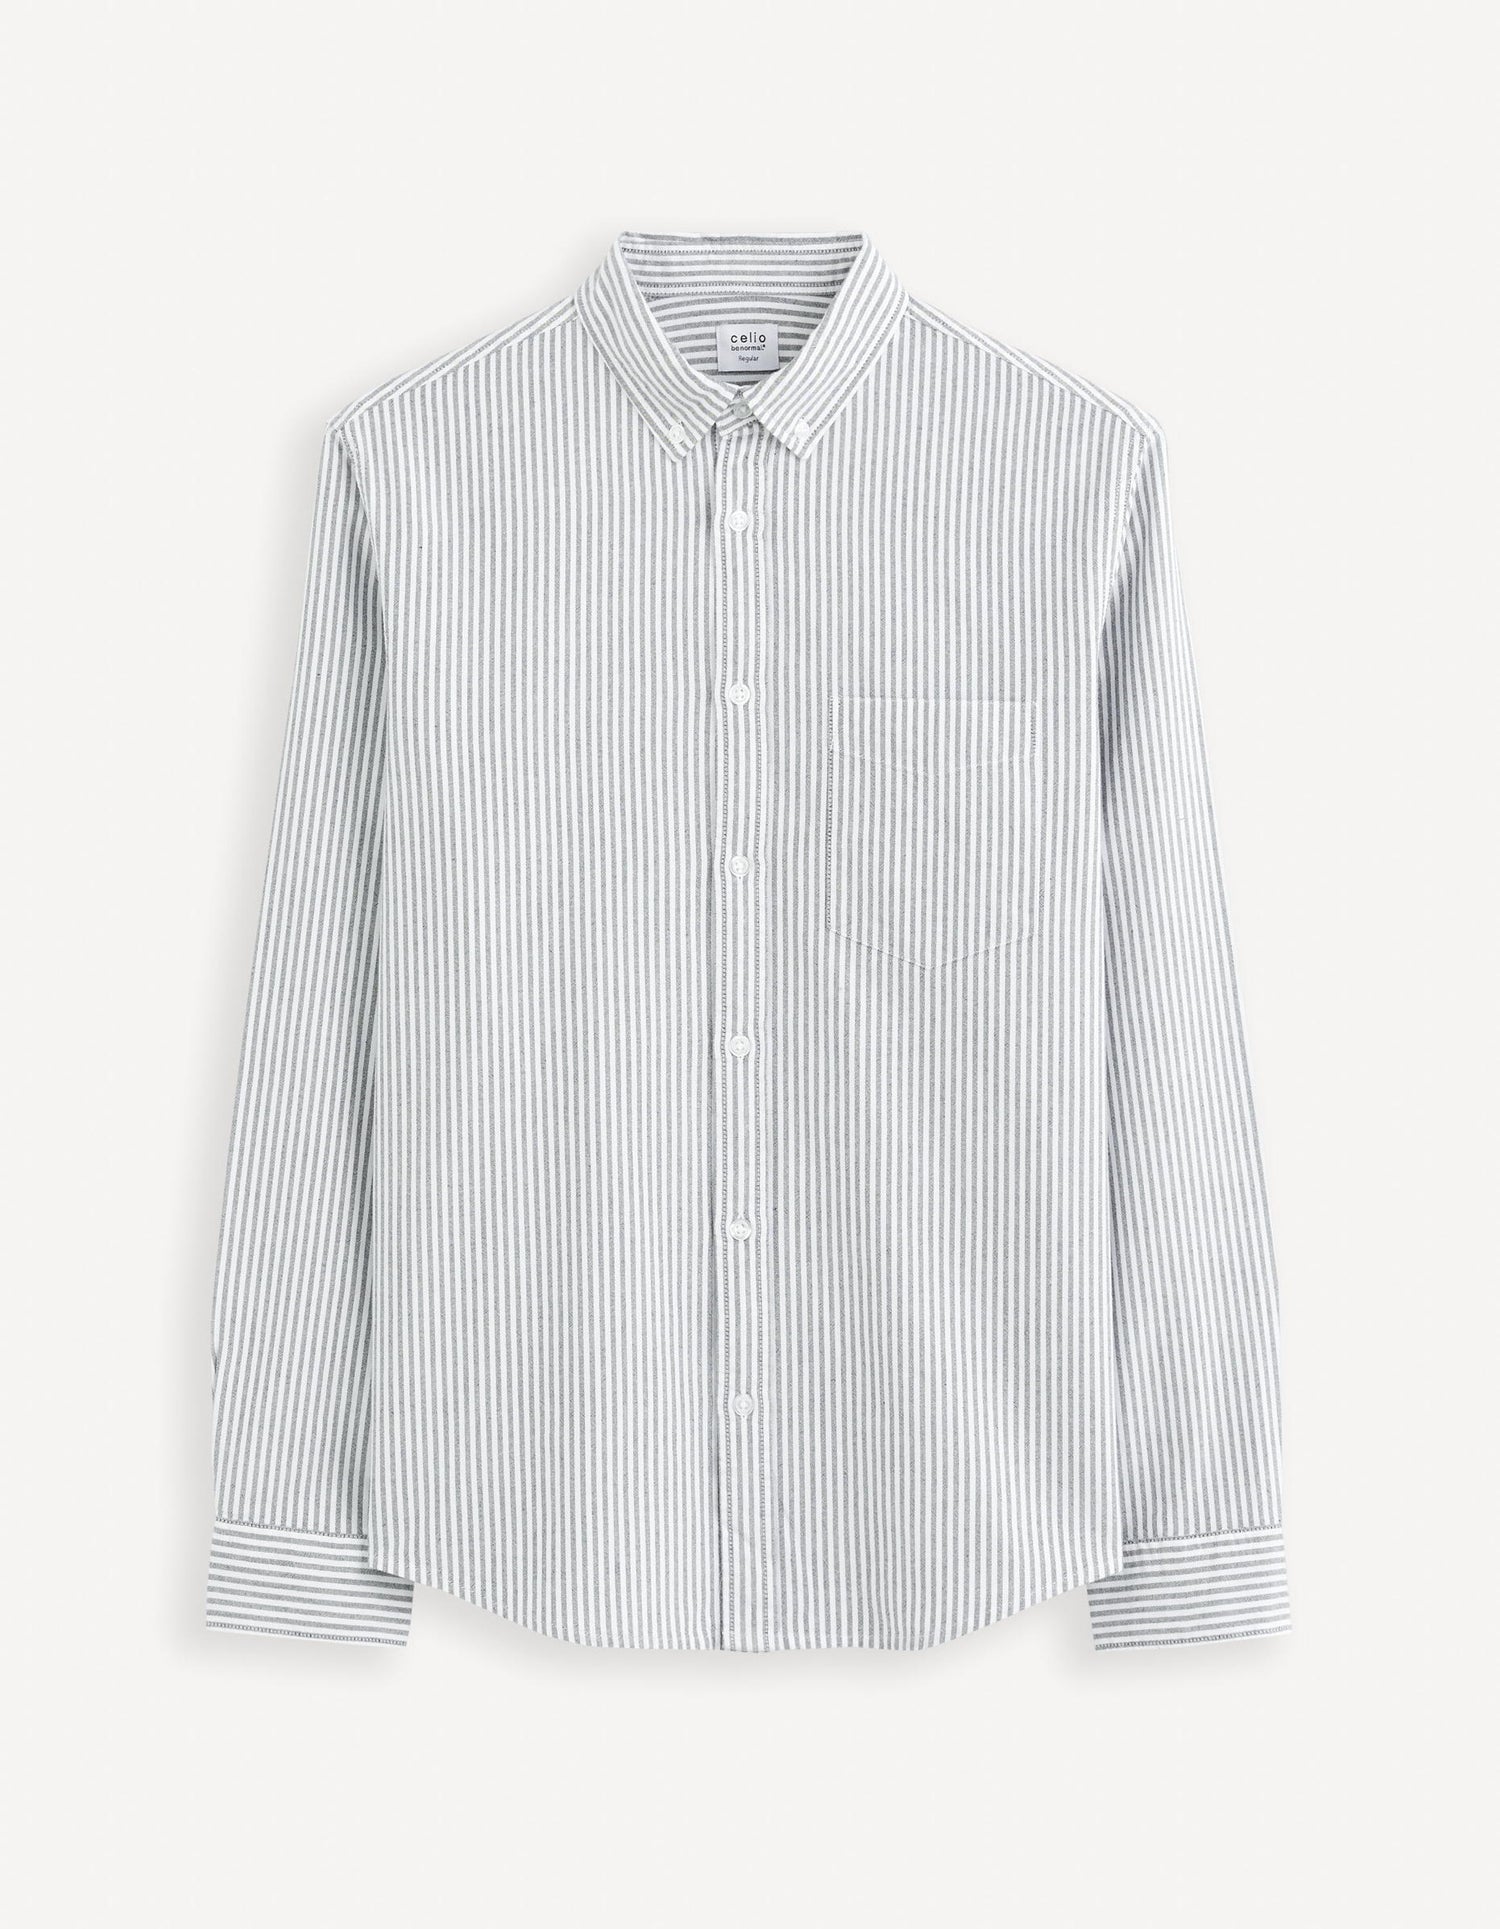 Regular 100% Cotton Oxford Shirt_CAOXFORDY_BLACK_02